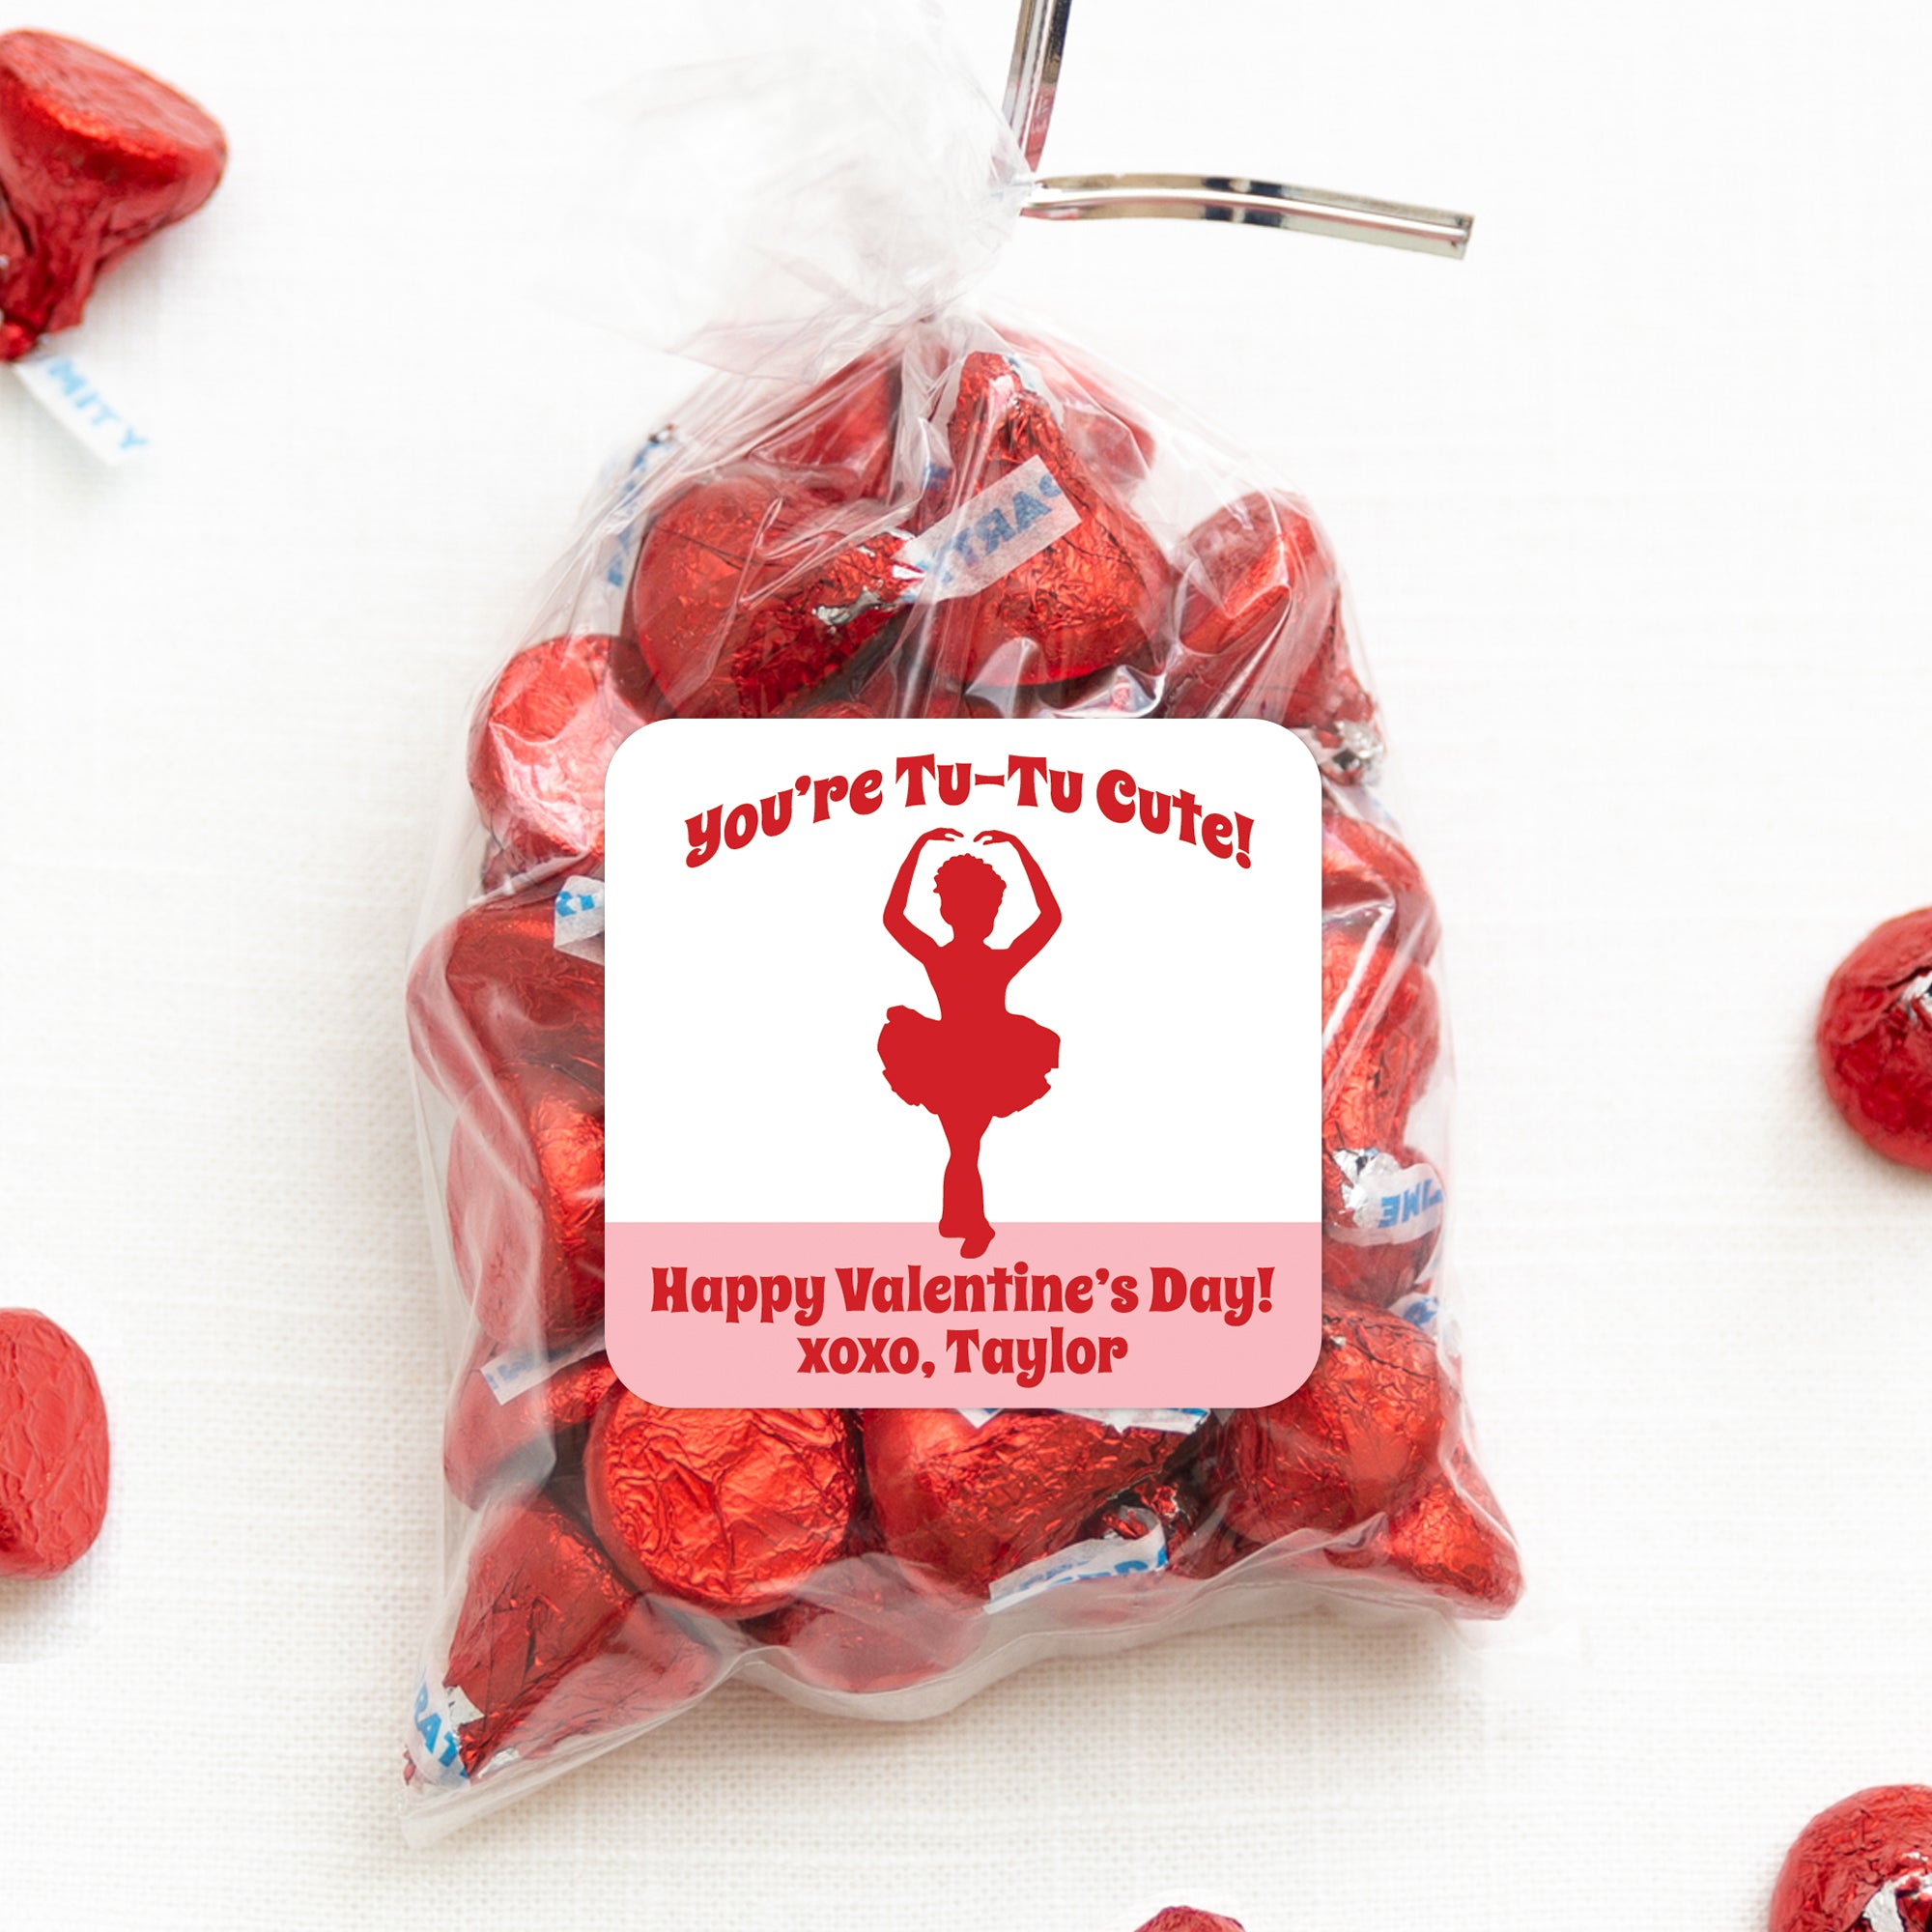 Ballet | tutu | Square sticker Valentine's day | Red and White 2.5" square sticker for favor bag |PIPSY.COM